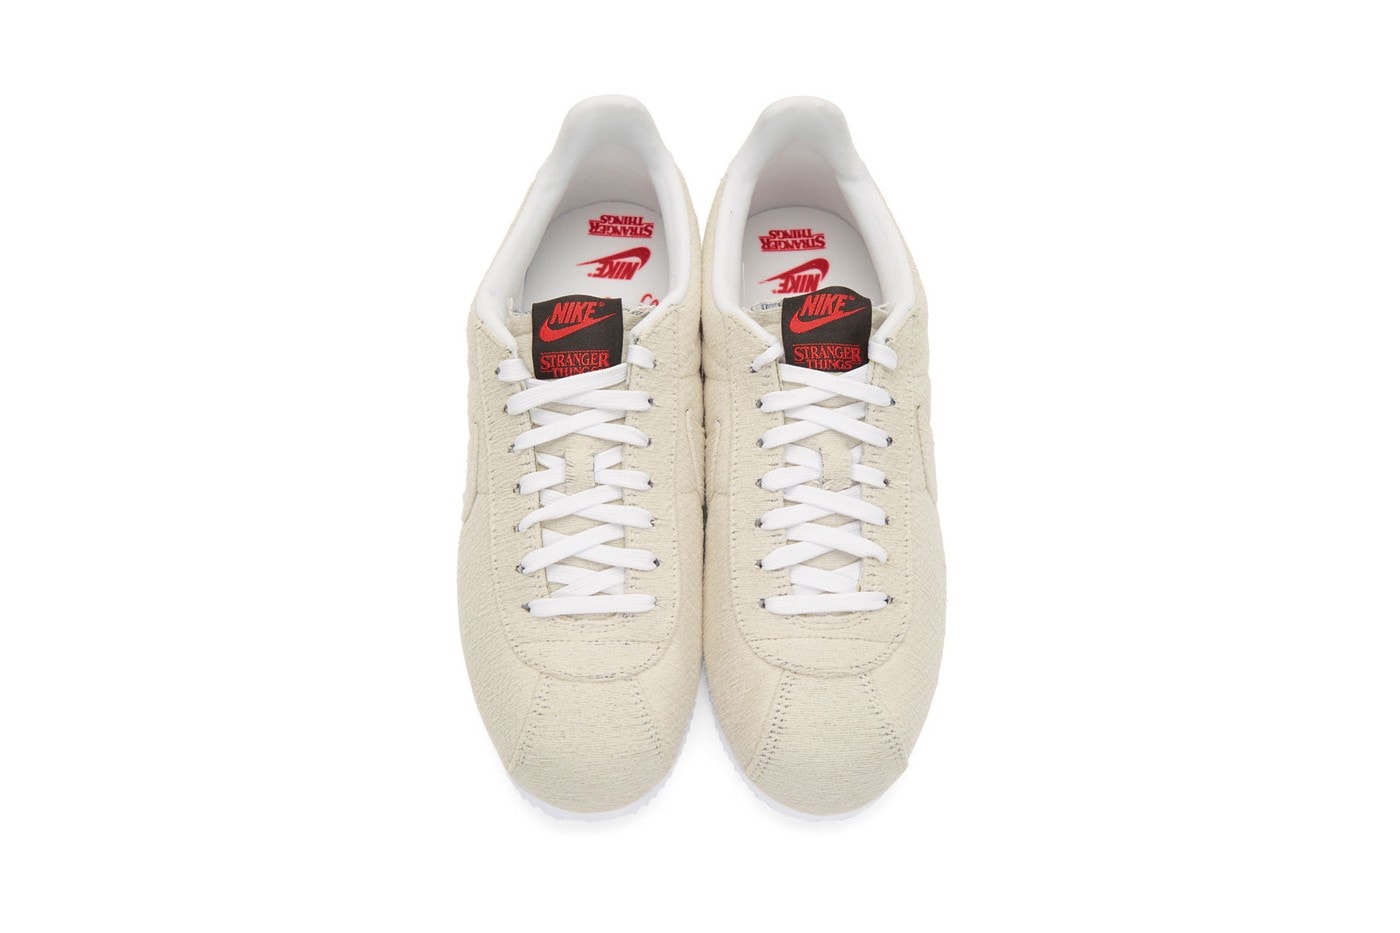 Stranger Things x Nike Air Tailwind 79 Cortez Release Drop Sneaker Shoe Beige White Laces Branding